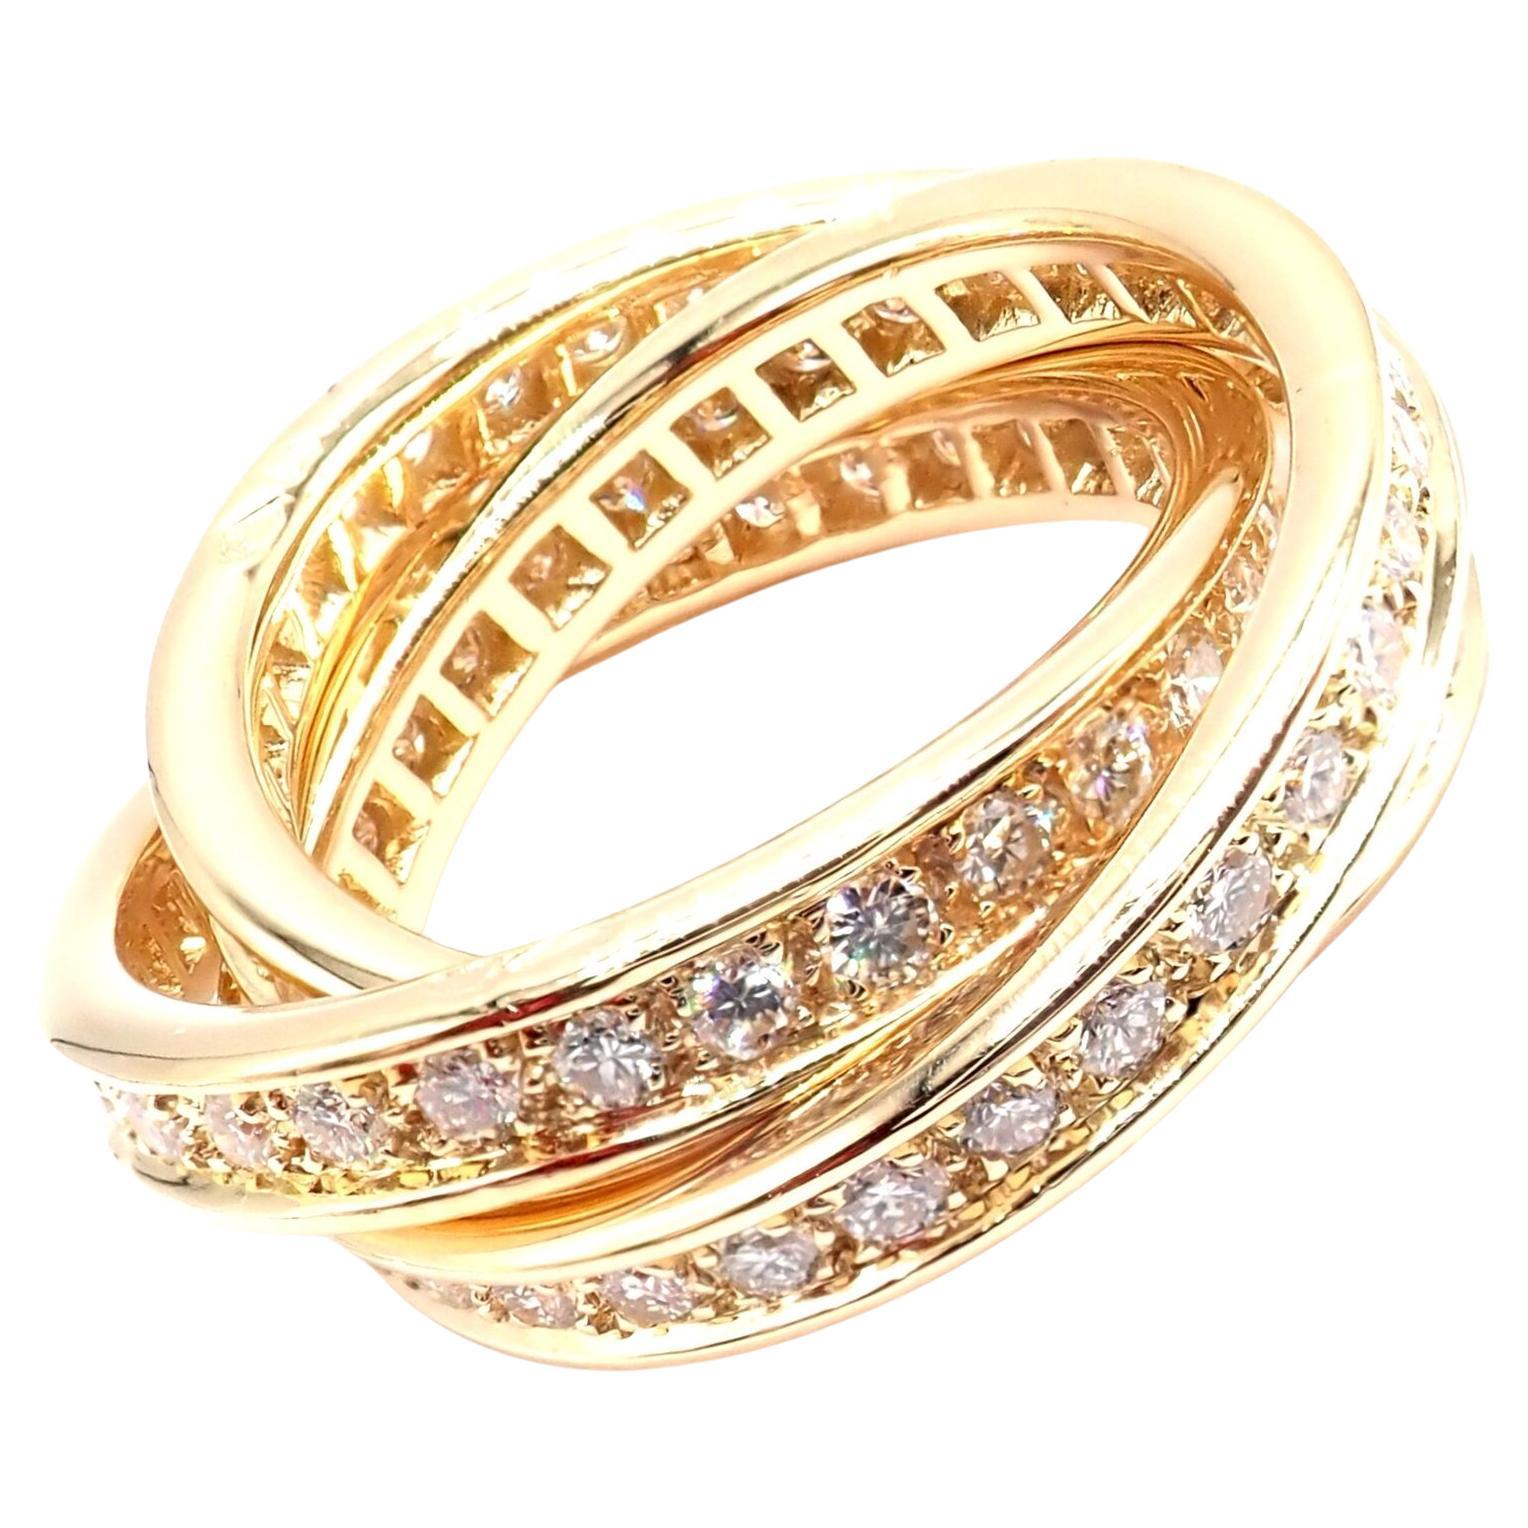 Cartier, bague Trinity en or jaune et diamants